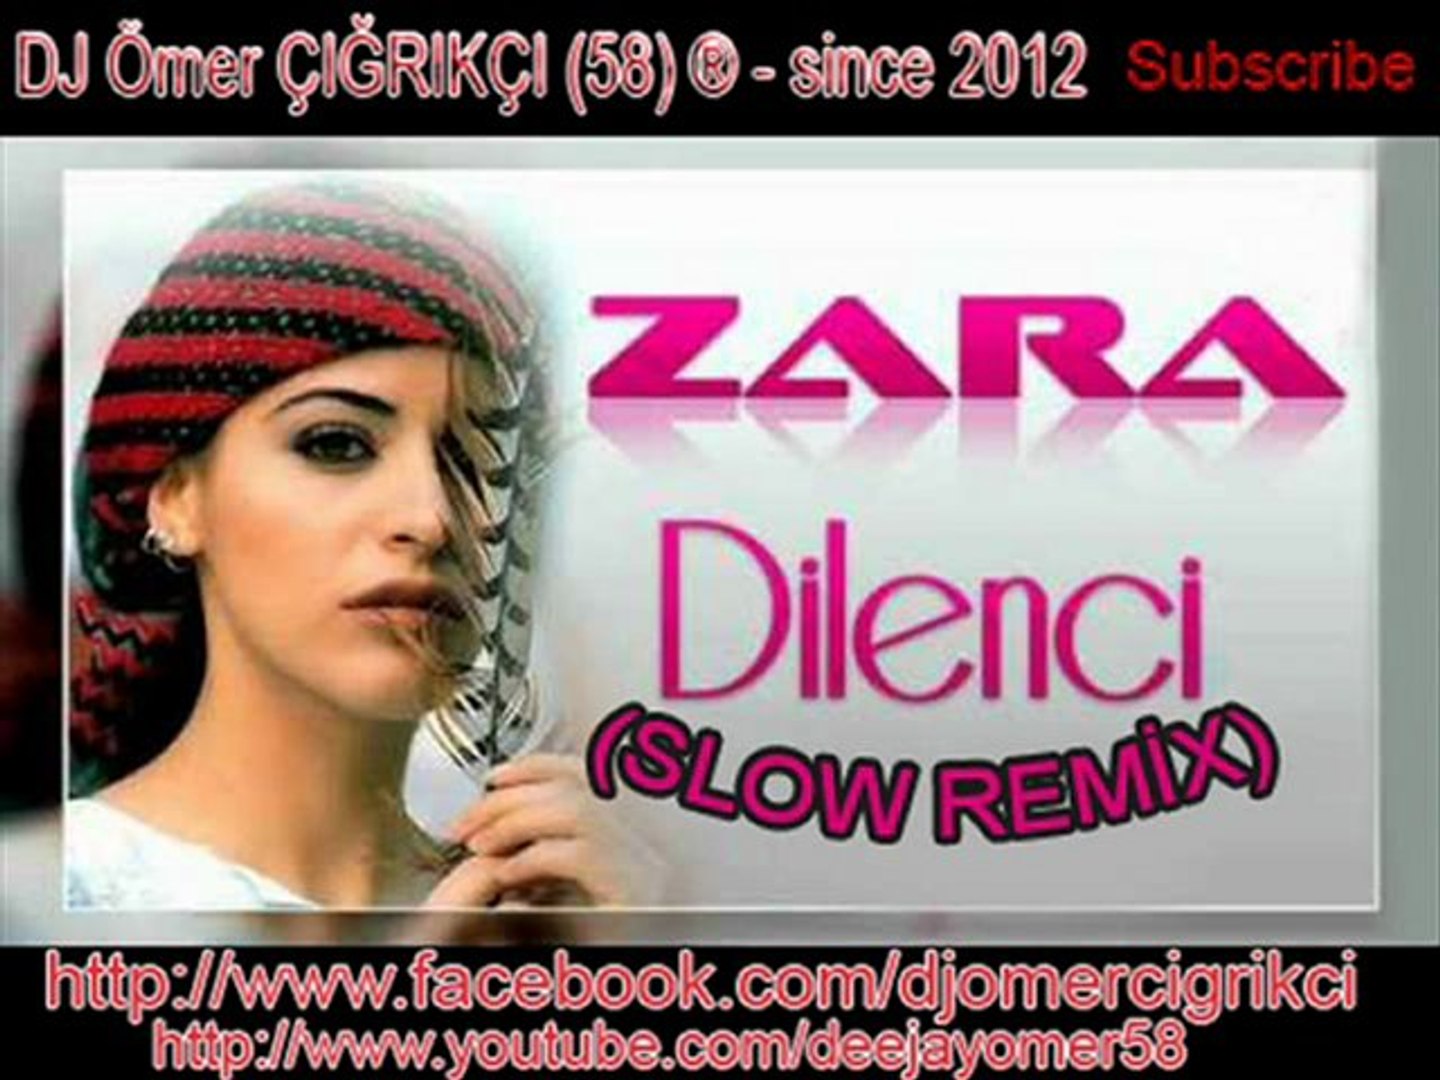 Zara - Dilenci 2012 YENİ ( DJ Ömer ÇIĞRIKÇI (58) Slow Remix ) Orhan  Gencebay Bir Ömür - Dailymotion Video